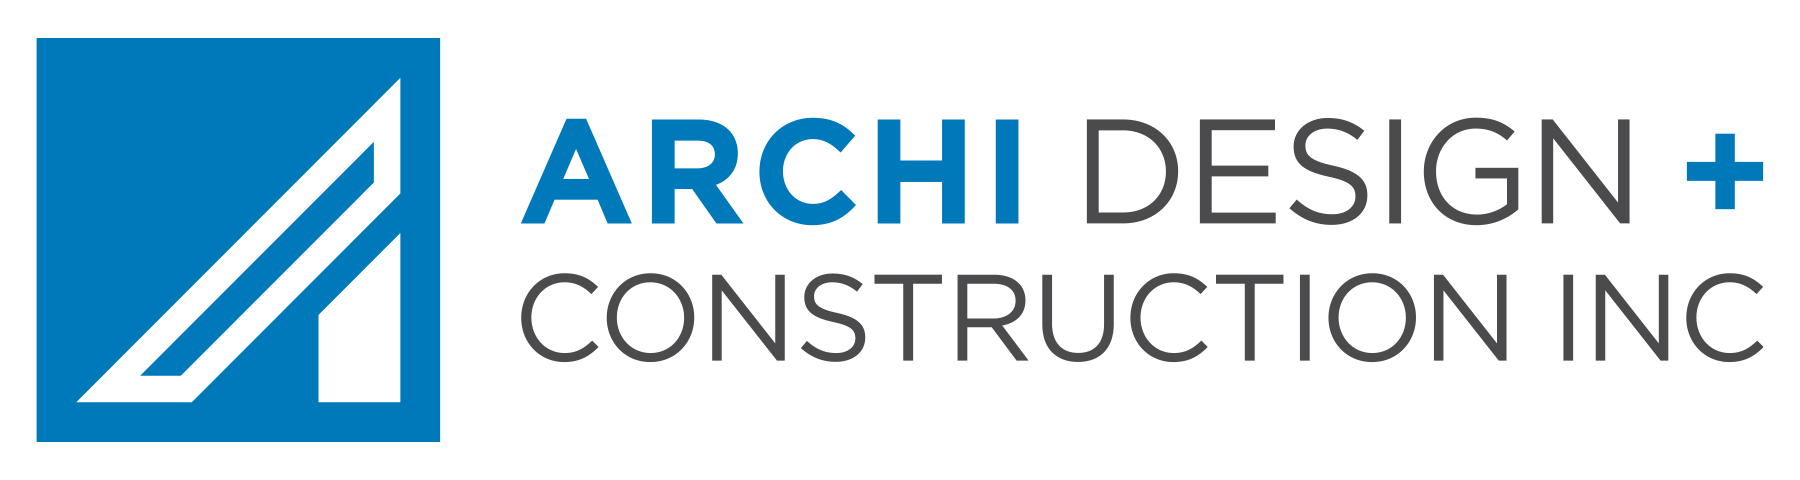 Archi Design + Construction Inc